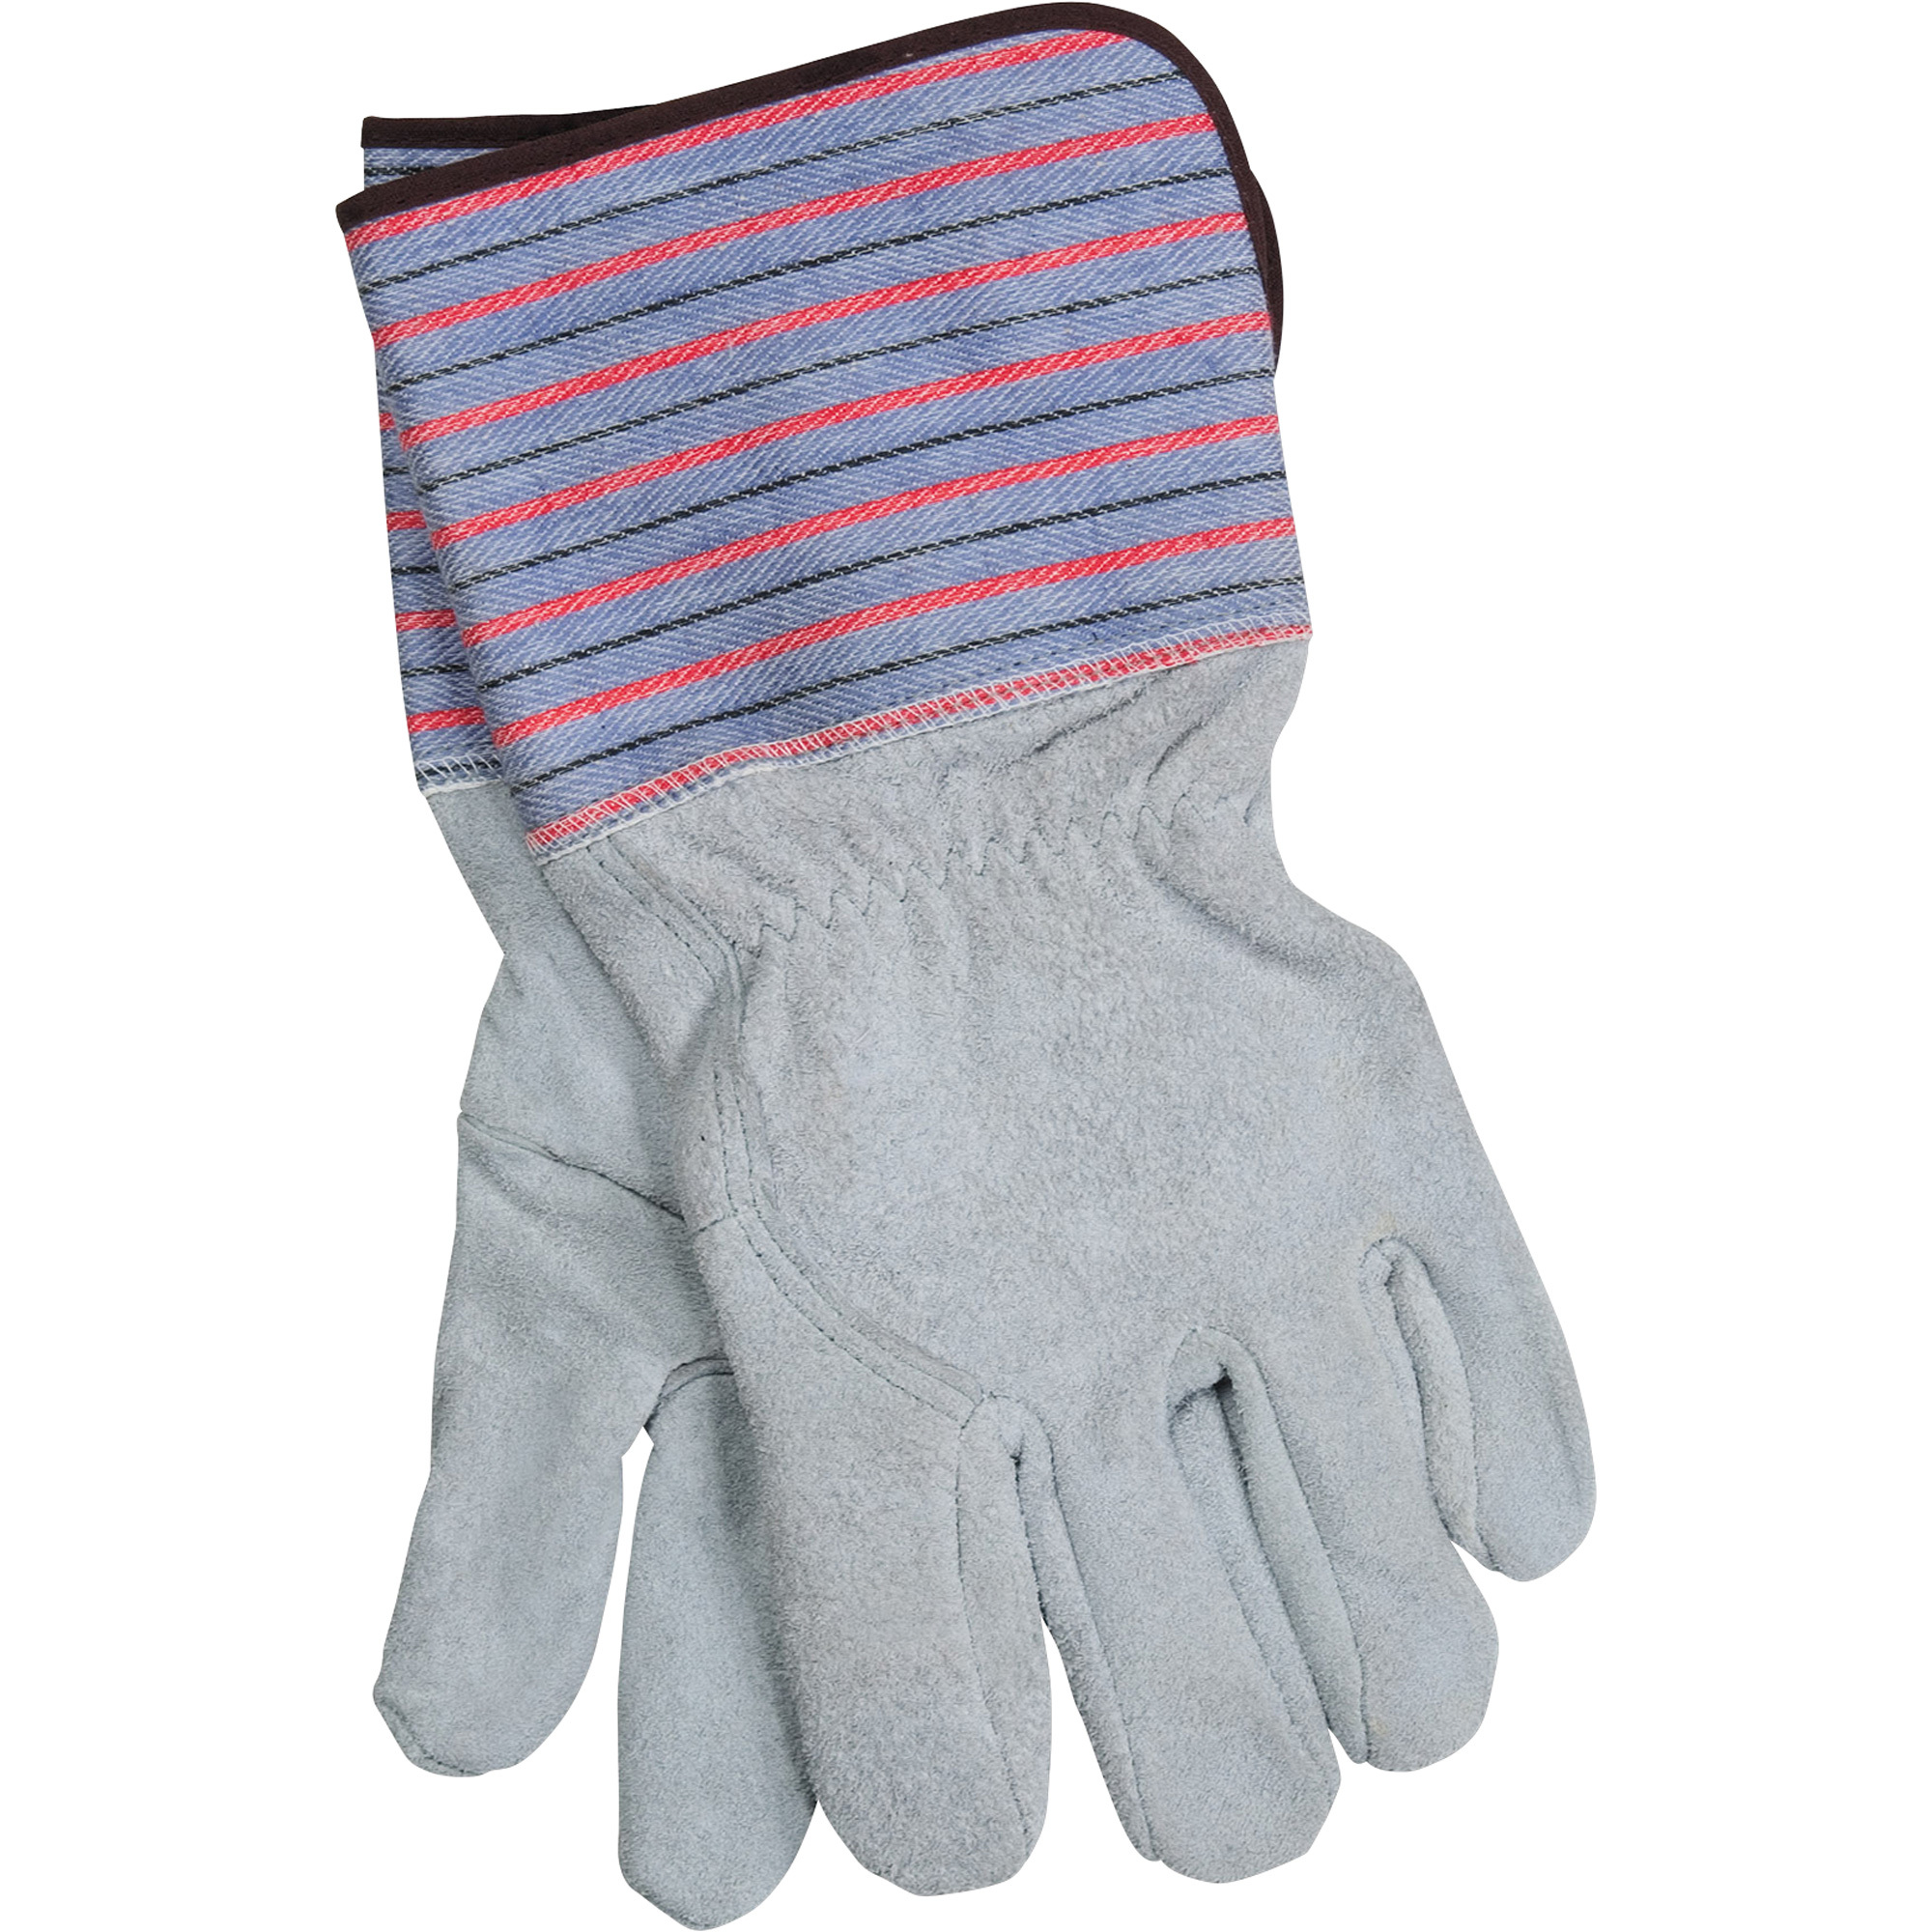 Hobart Unlined Leather Welding Gloves â Gray, One Size Fits Most, Pair, Model 770213